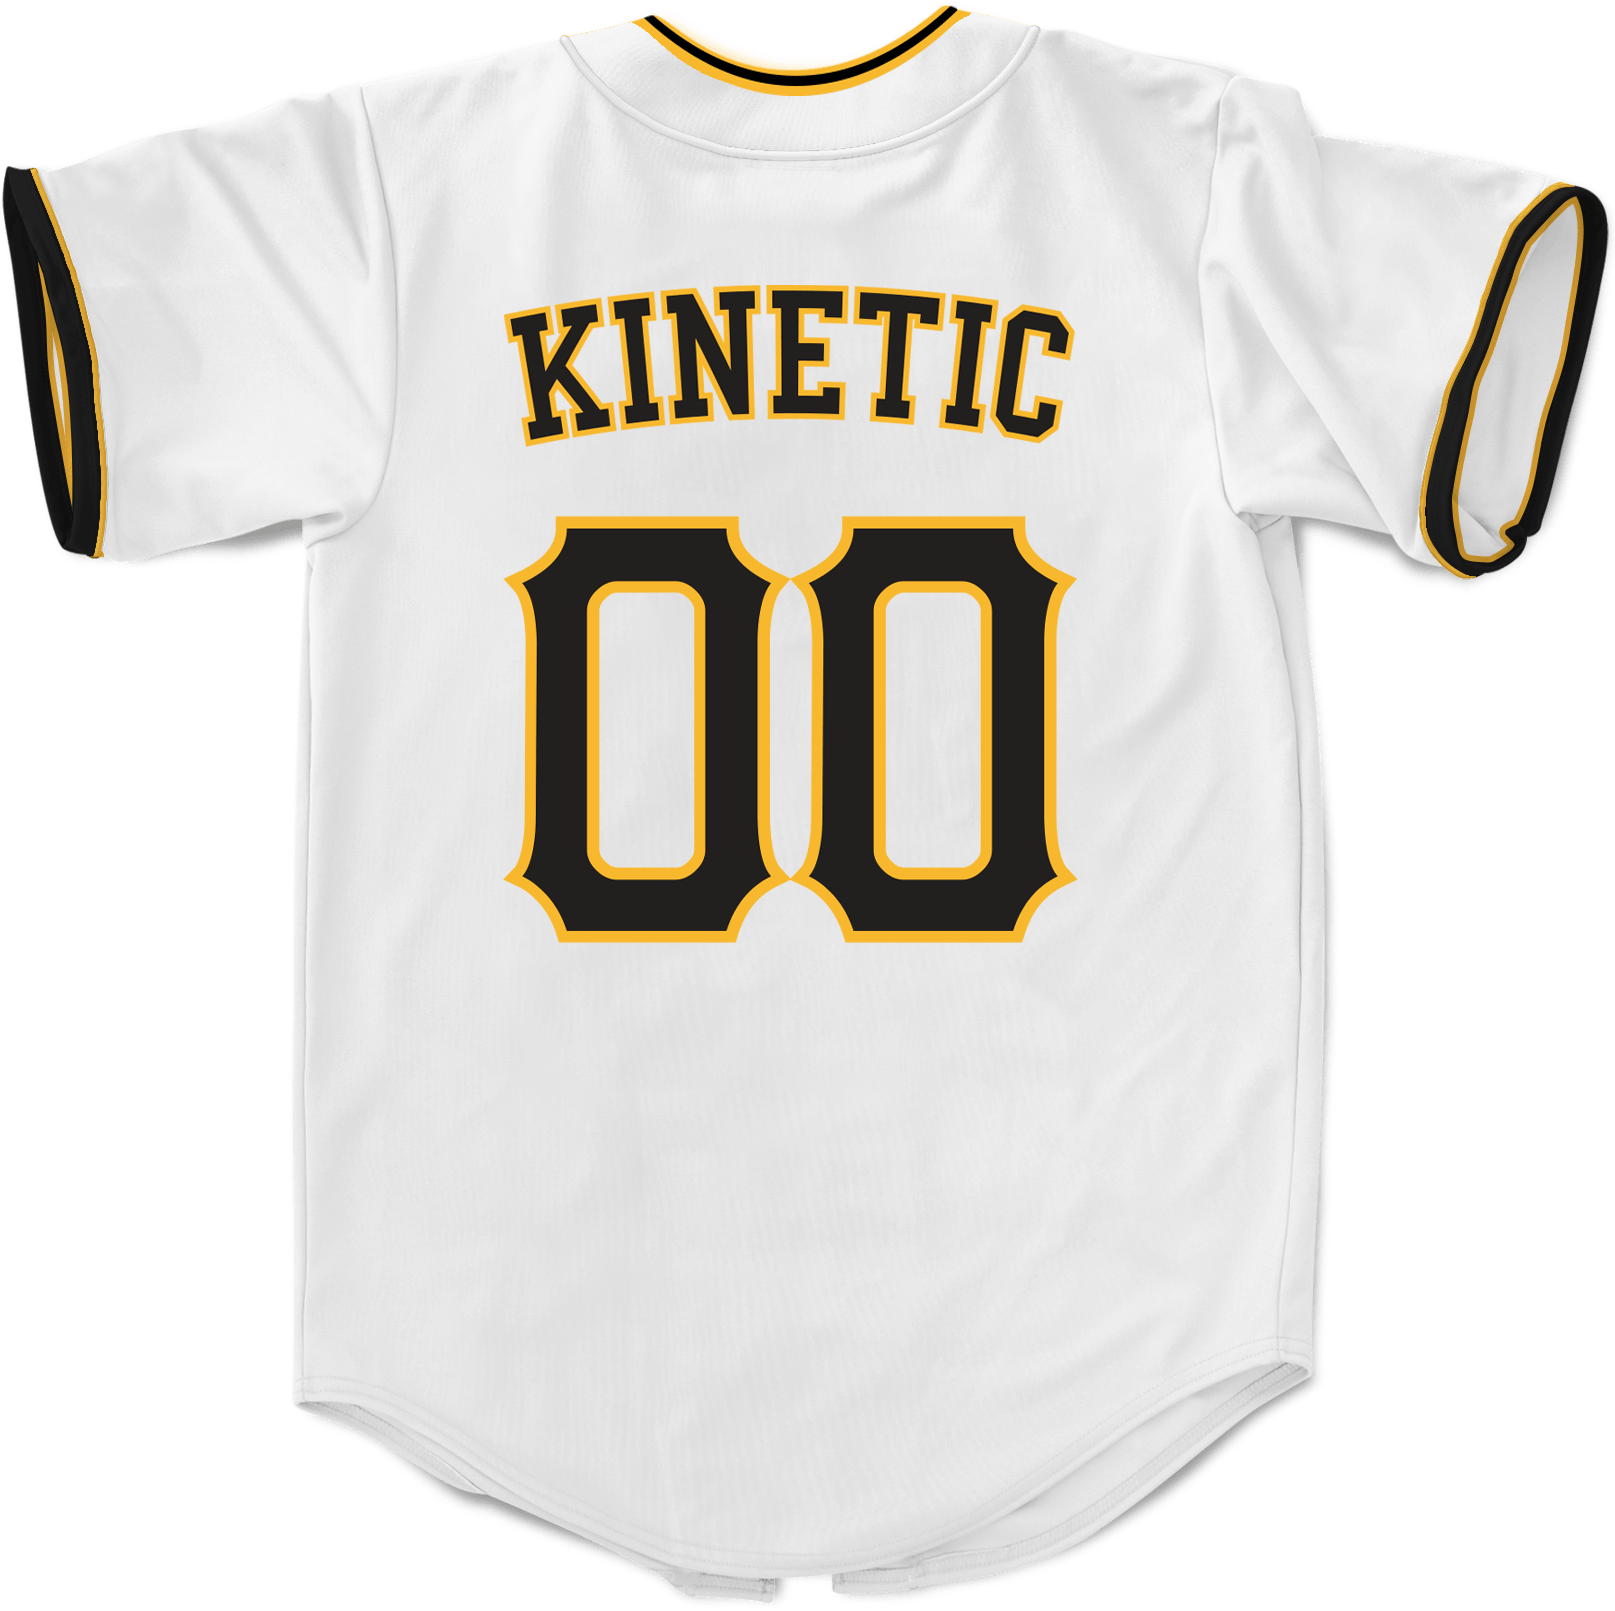 Sigma Nu - Strikeout Baseball Jersey - Kinetic Society